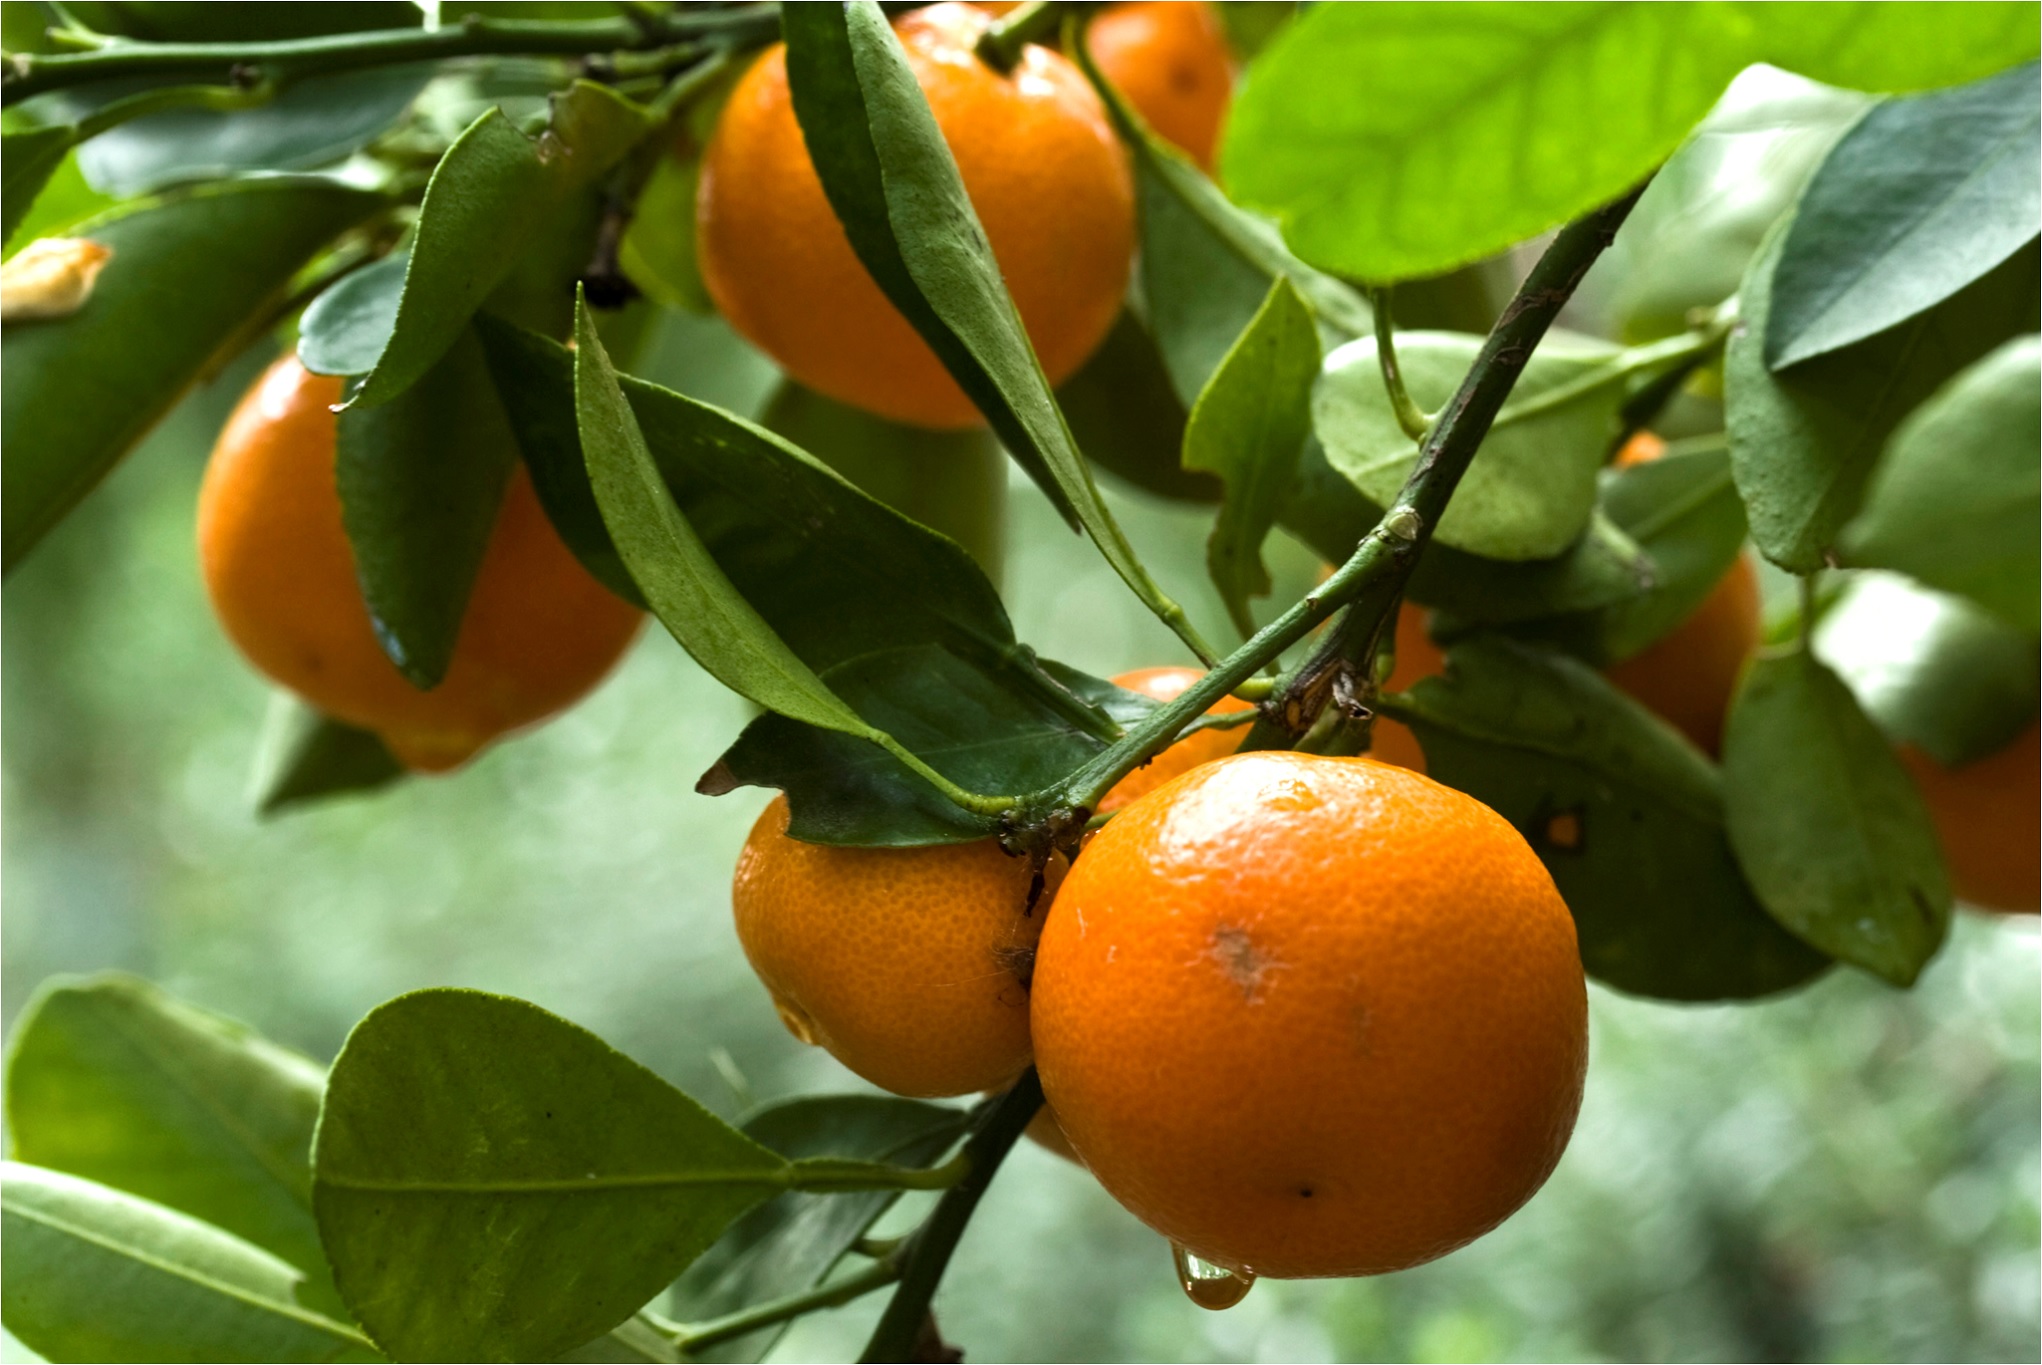 Oranges on Tree - Orange Magical Properties - Elune Blue